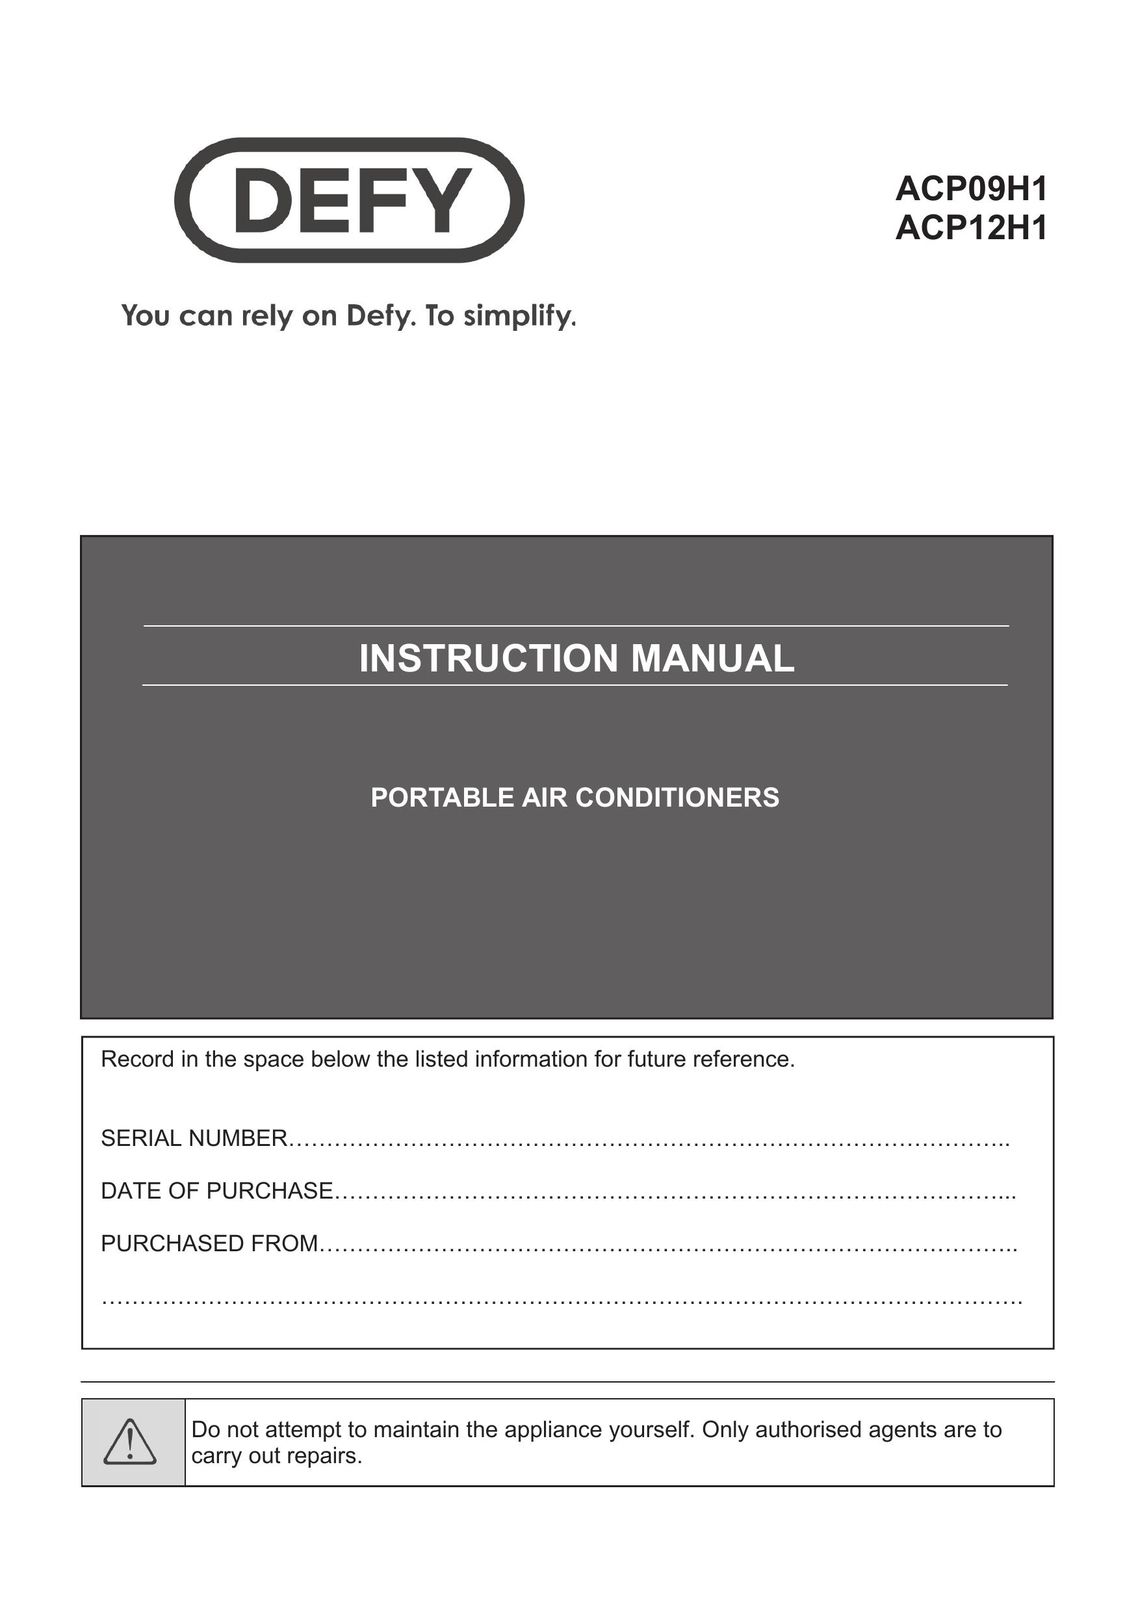 Defy Appliances ACP12H1 Air Conditioner User Manual